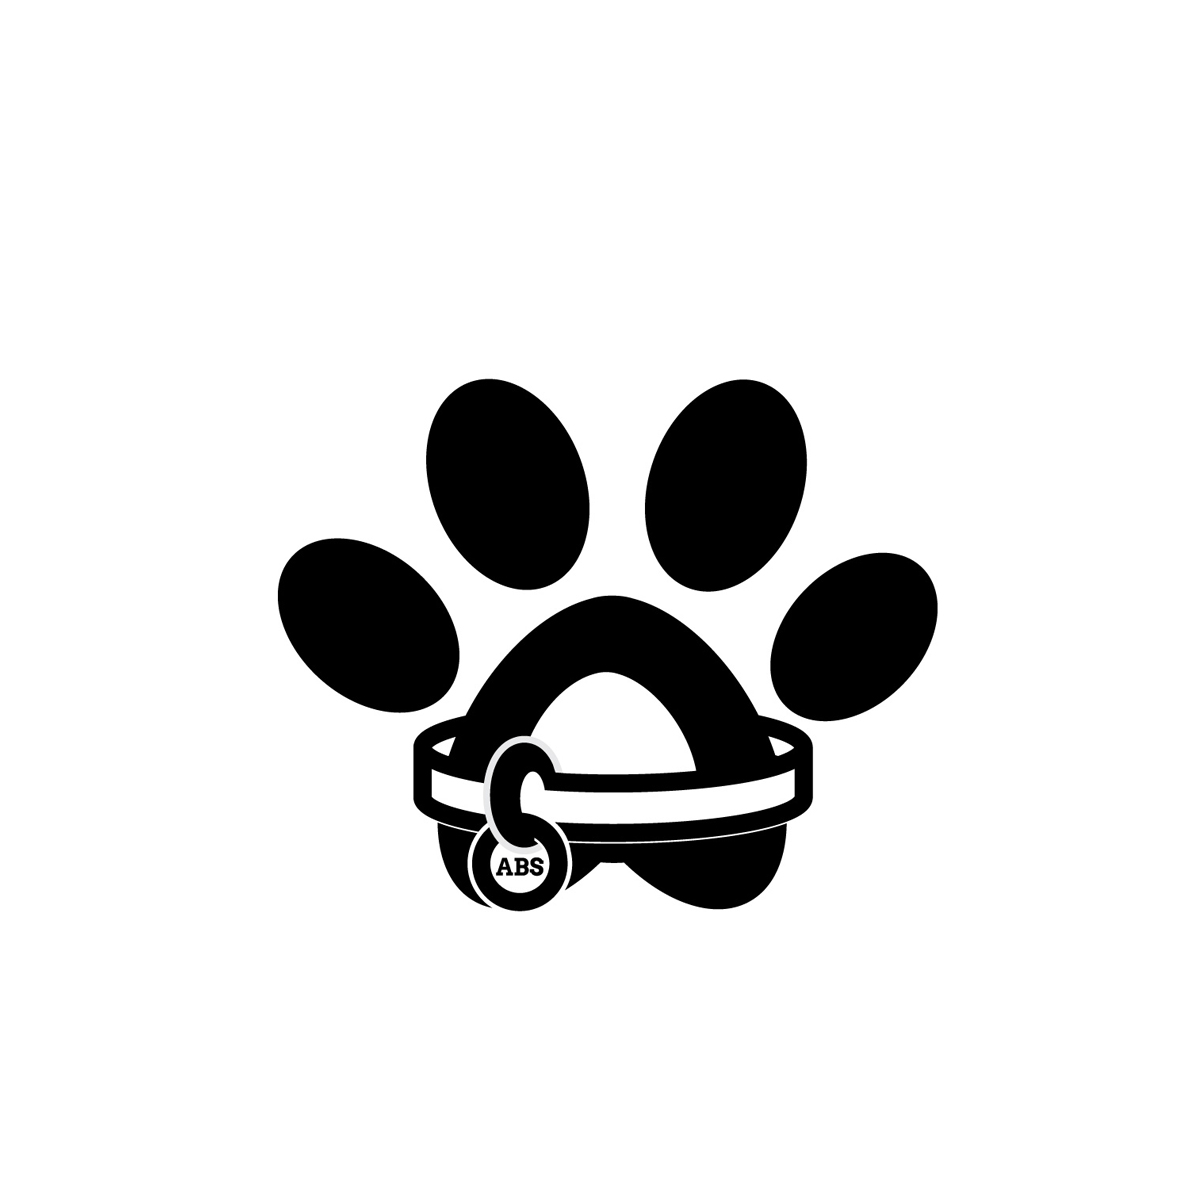 ABS Dog training monogram logo